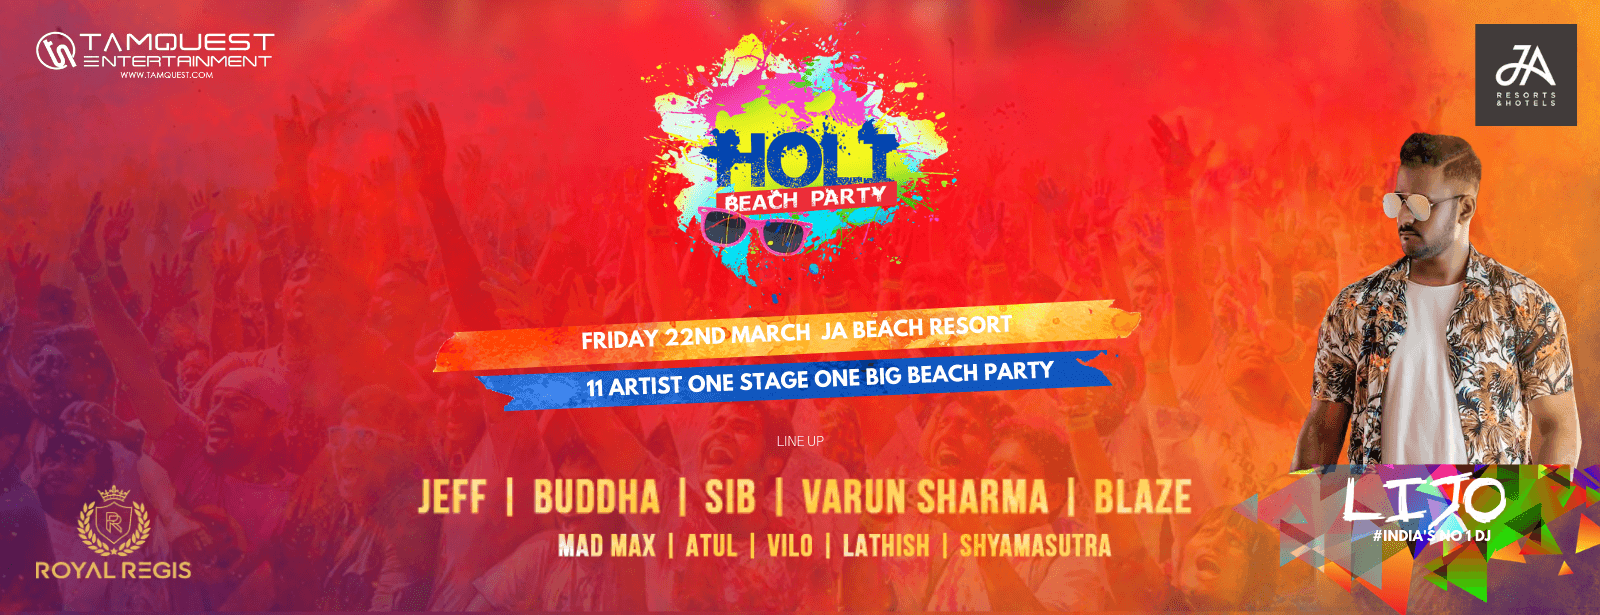 Holi Beach Party 2019 - Coming Soon in UAE